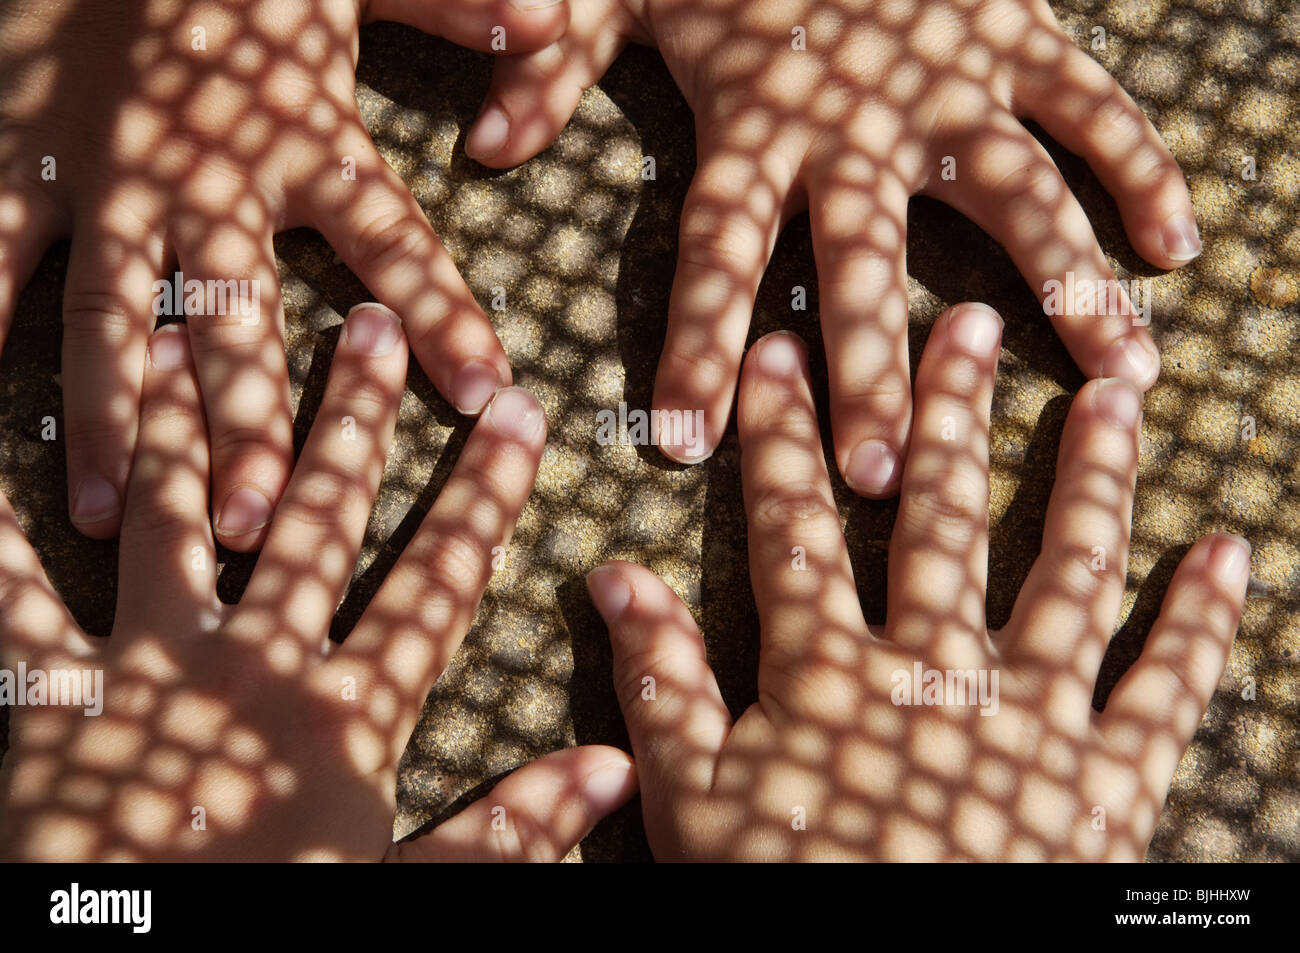 childrens hands touching under shadow pattern Stock Photo